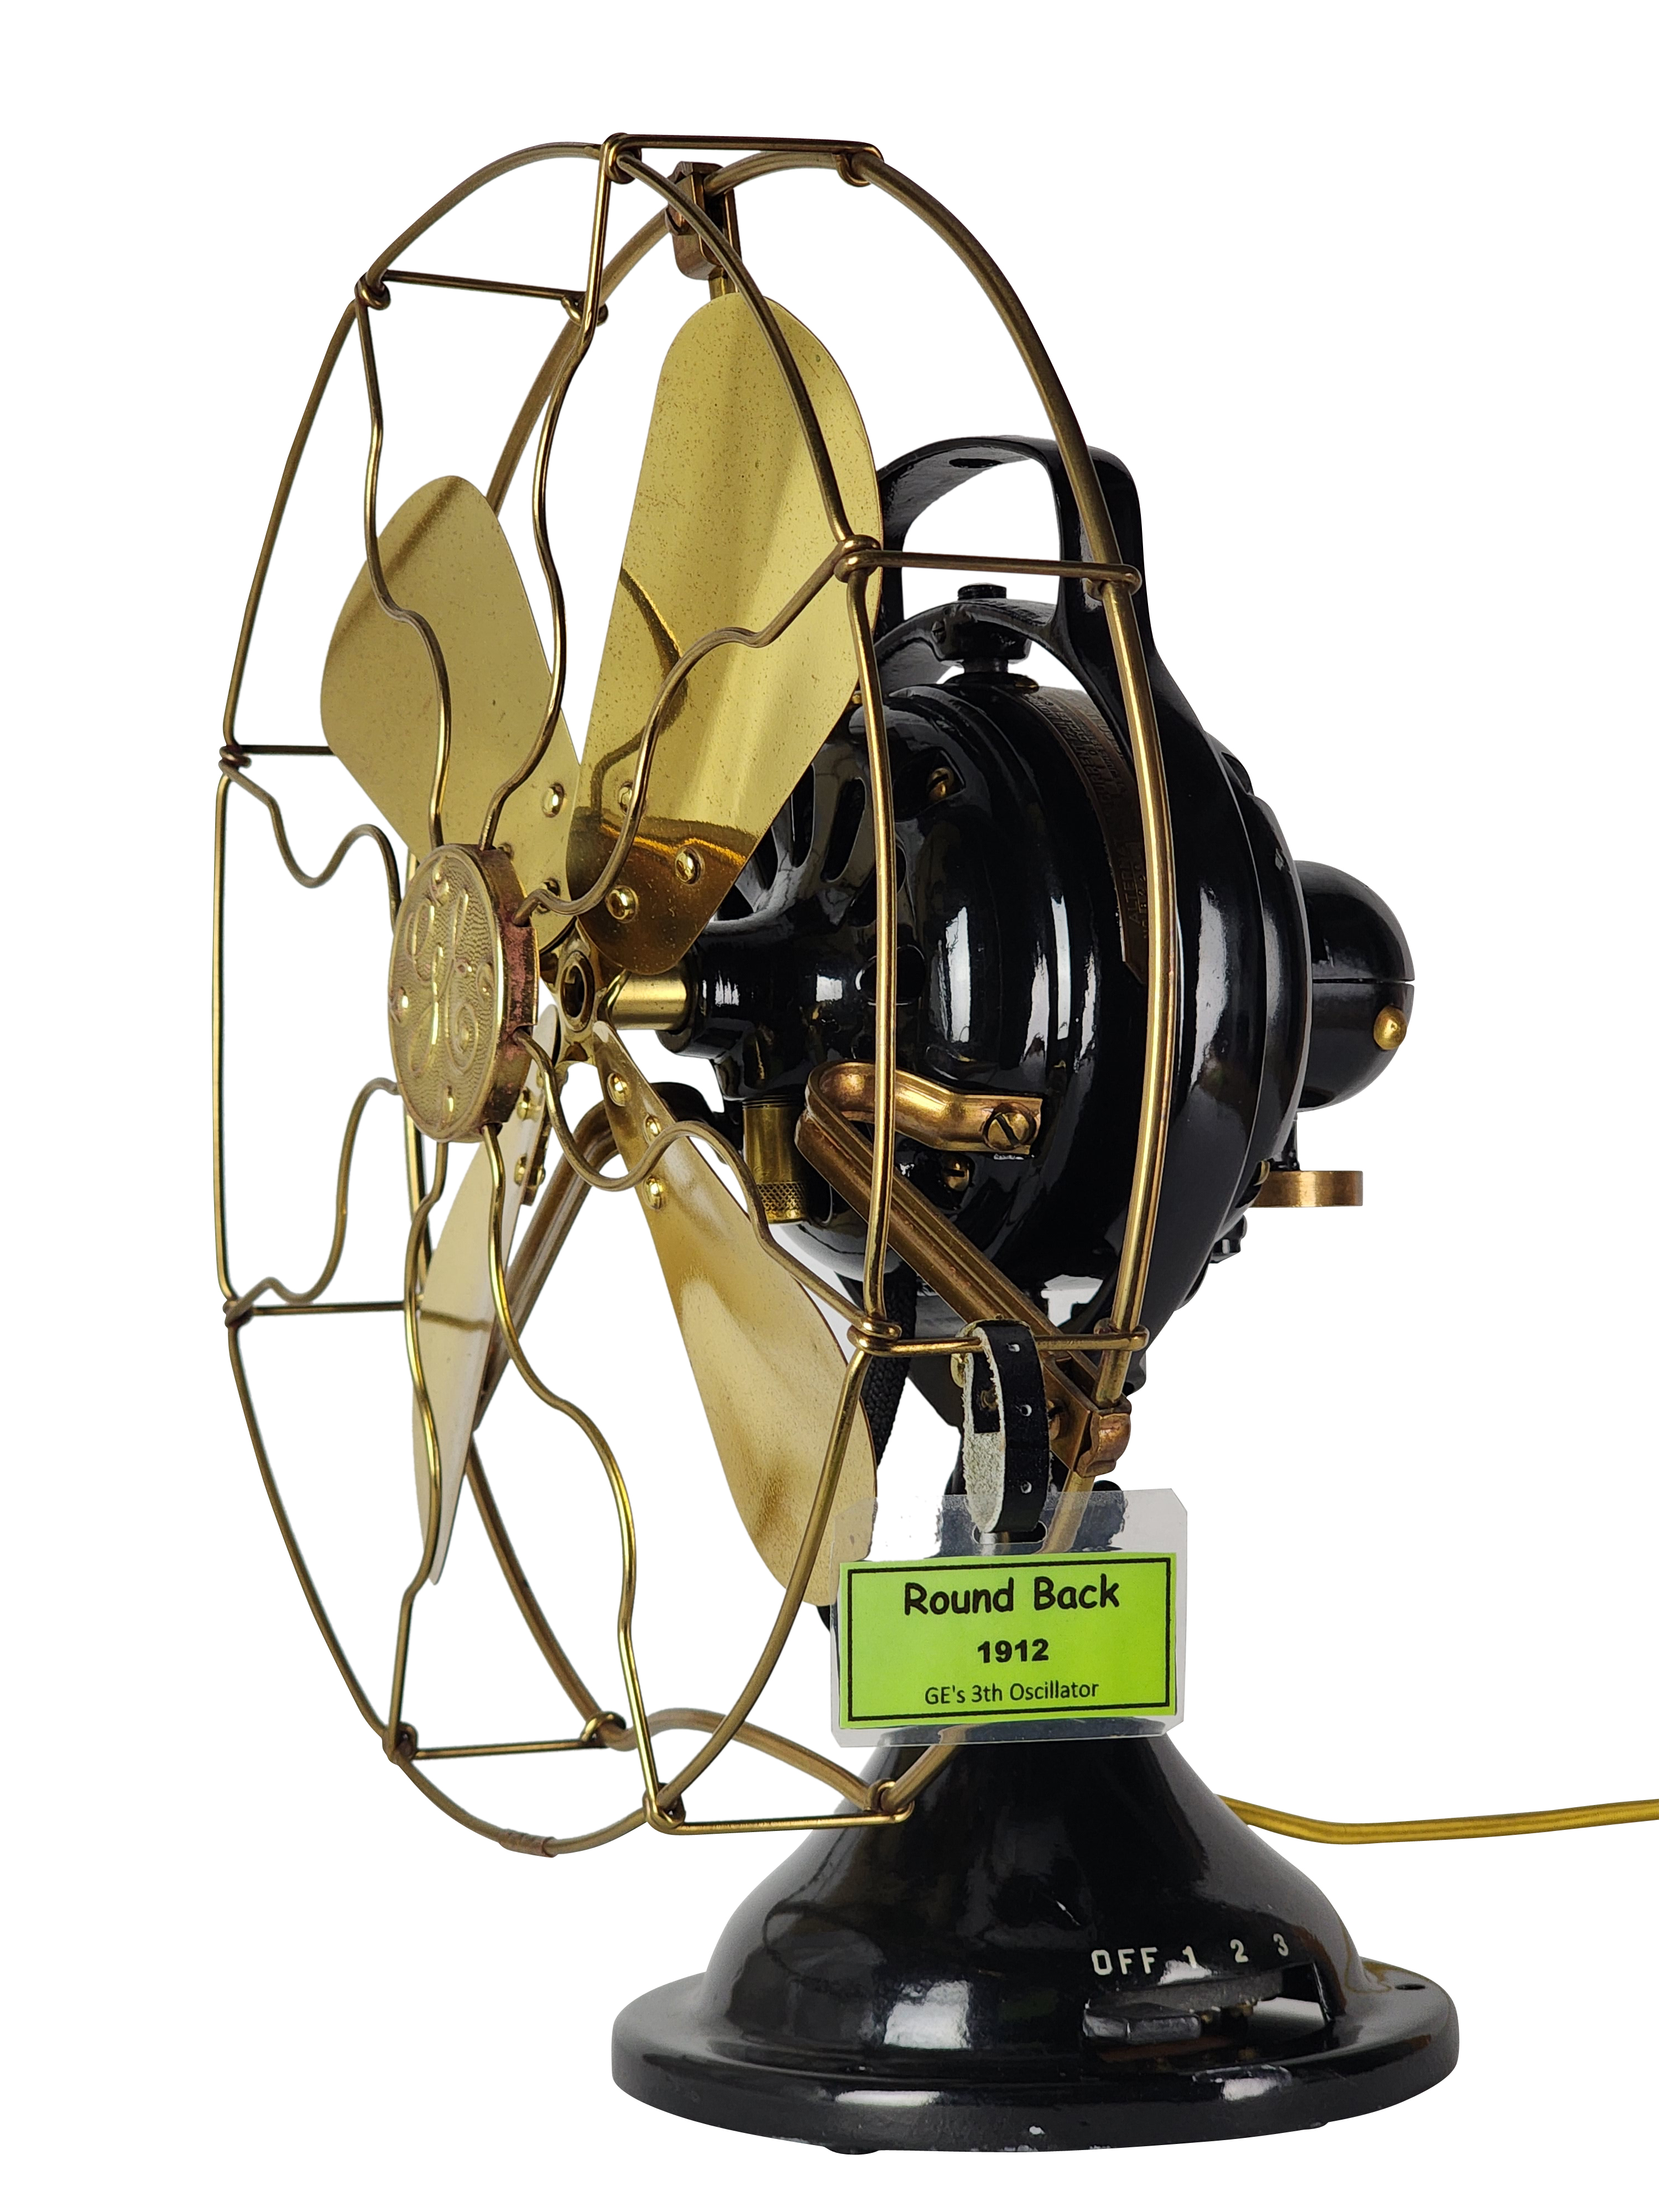 Circa 1912 12" GE Round Back Oscillating Desk Fan